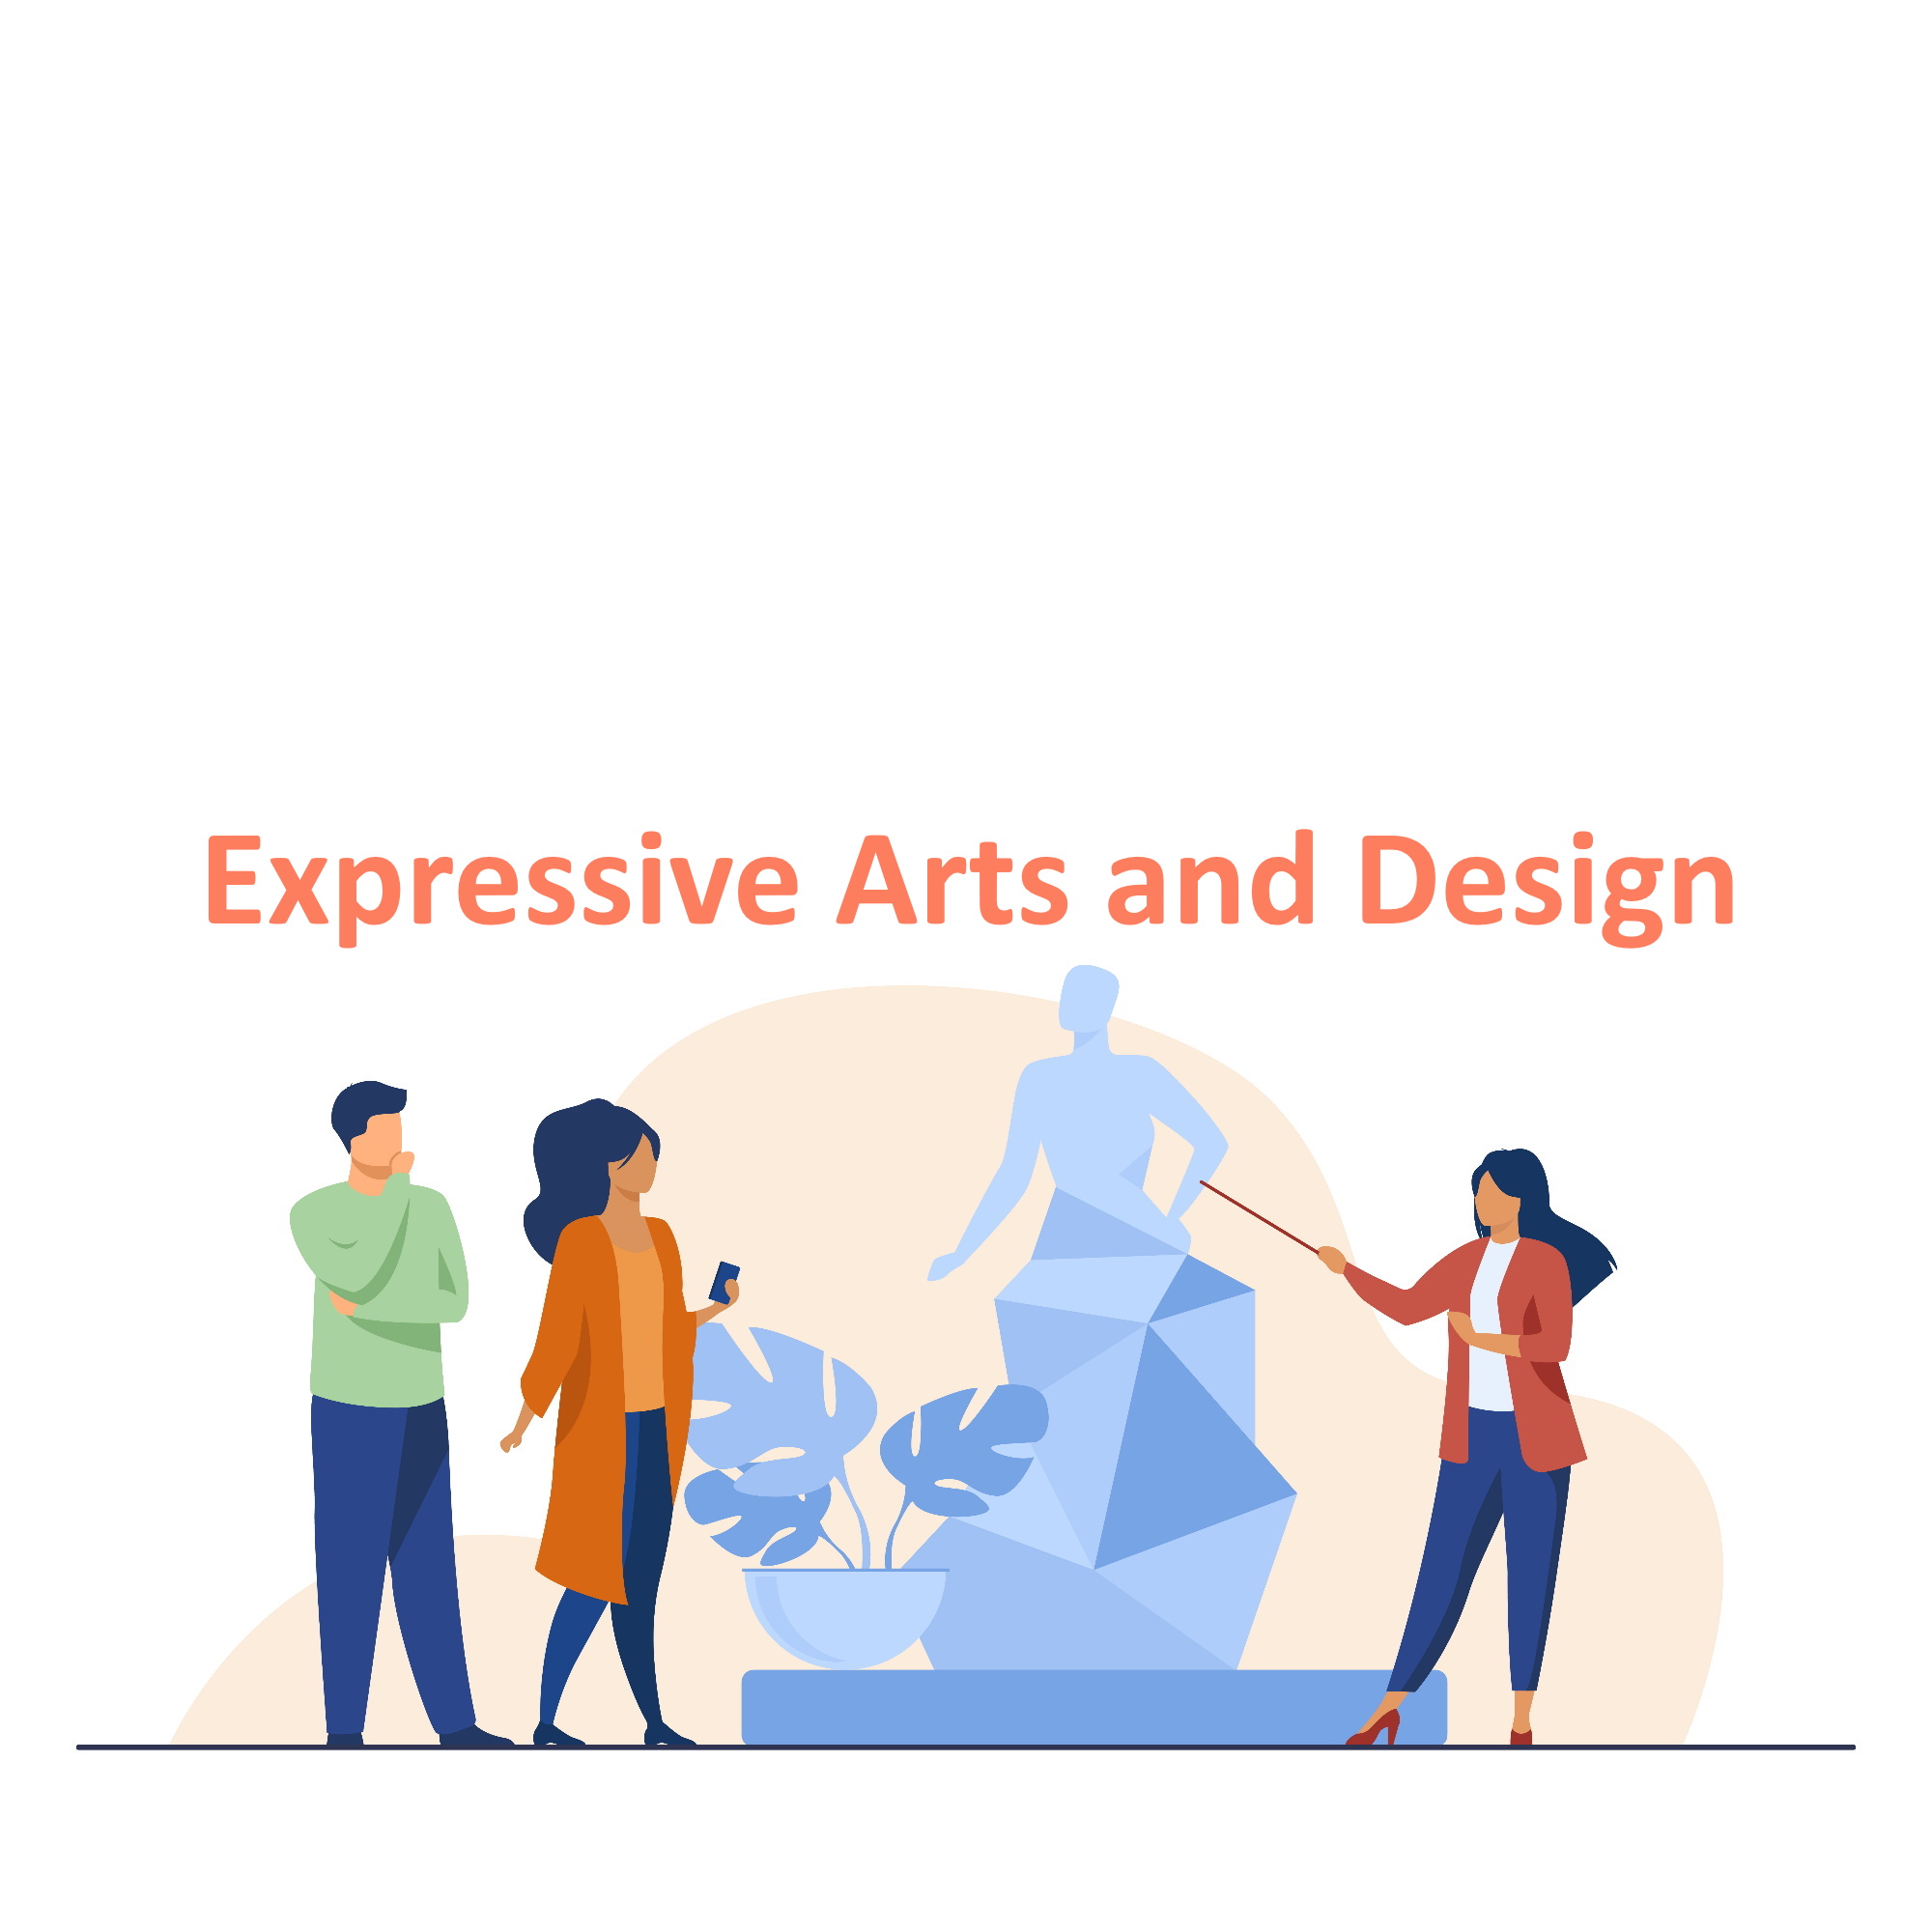 Expressive Arts and Design